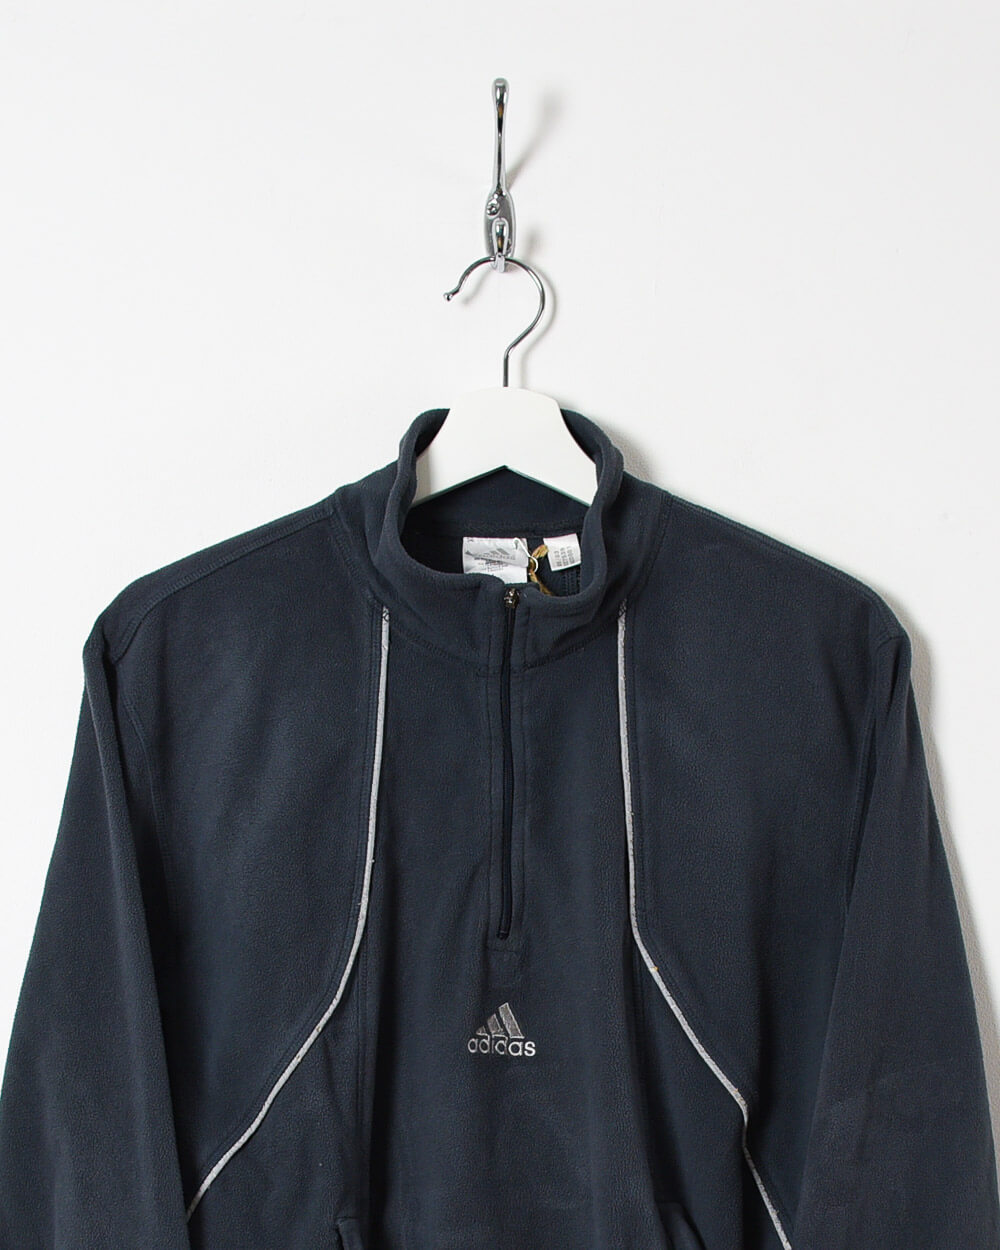 Grey Adidas 1/4 Zip Fleece - Medium